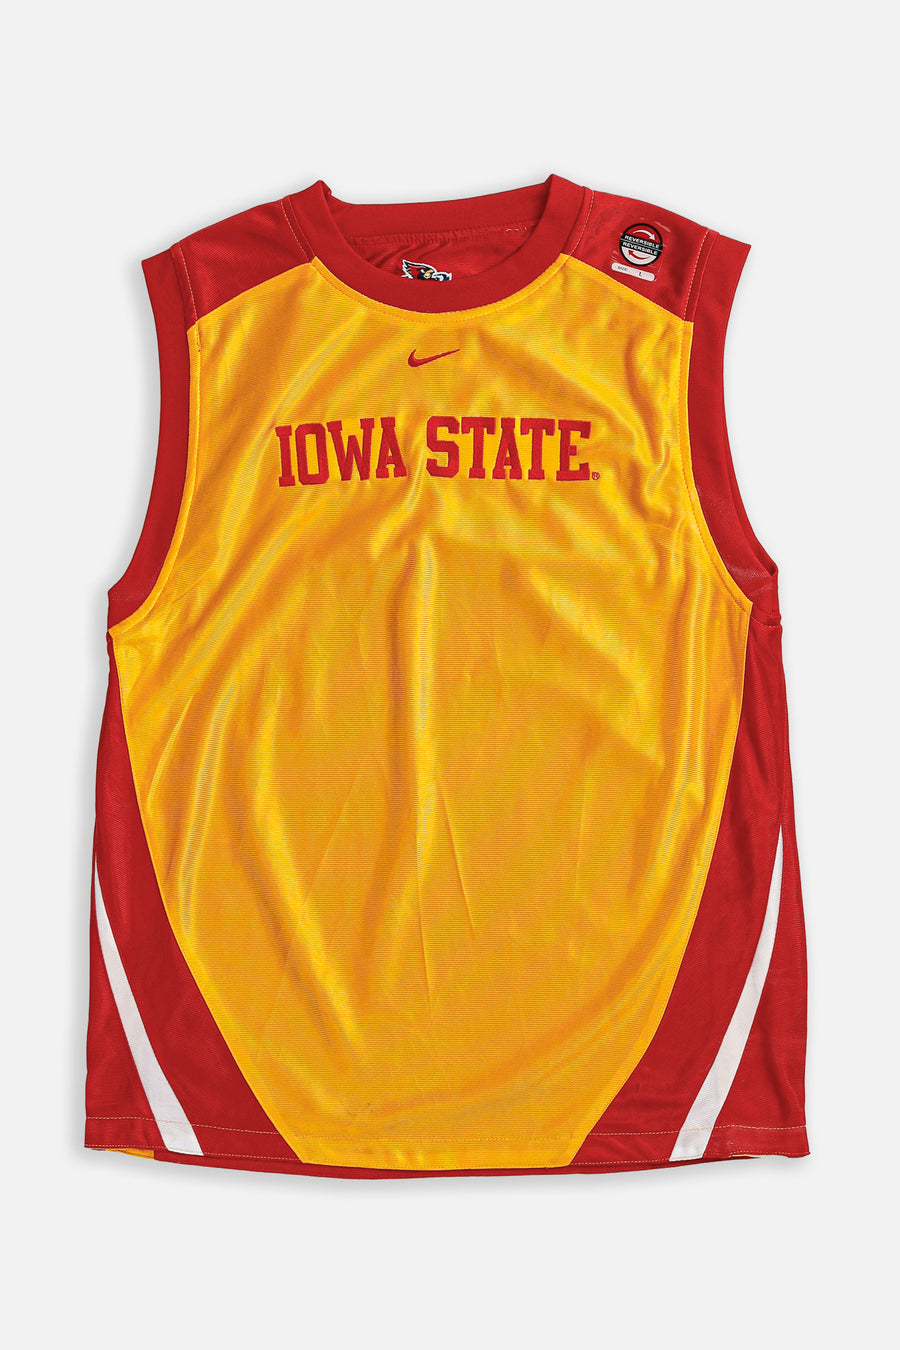 Vintage Iowa State NCAA Reversible Jersey - L